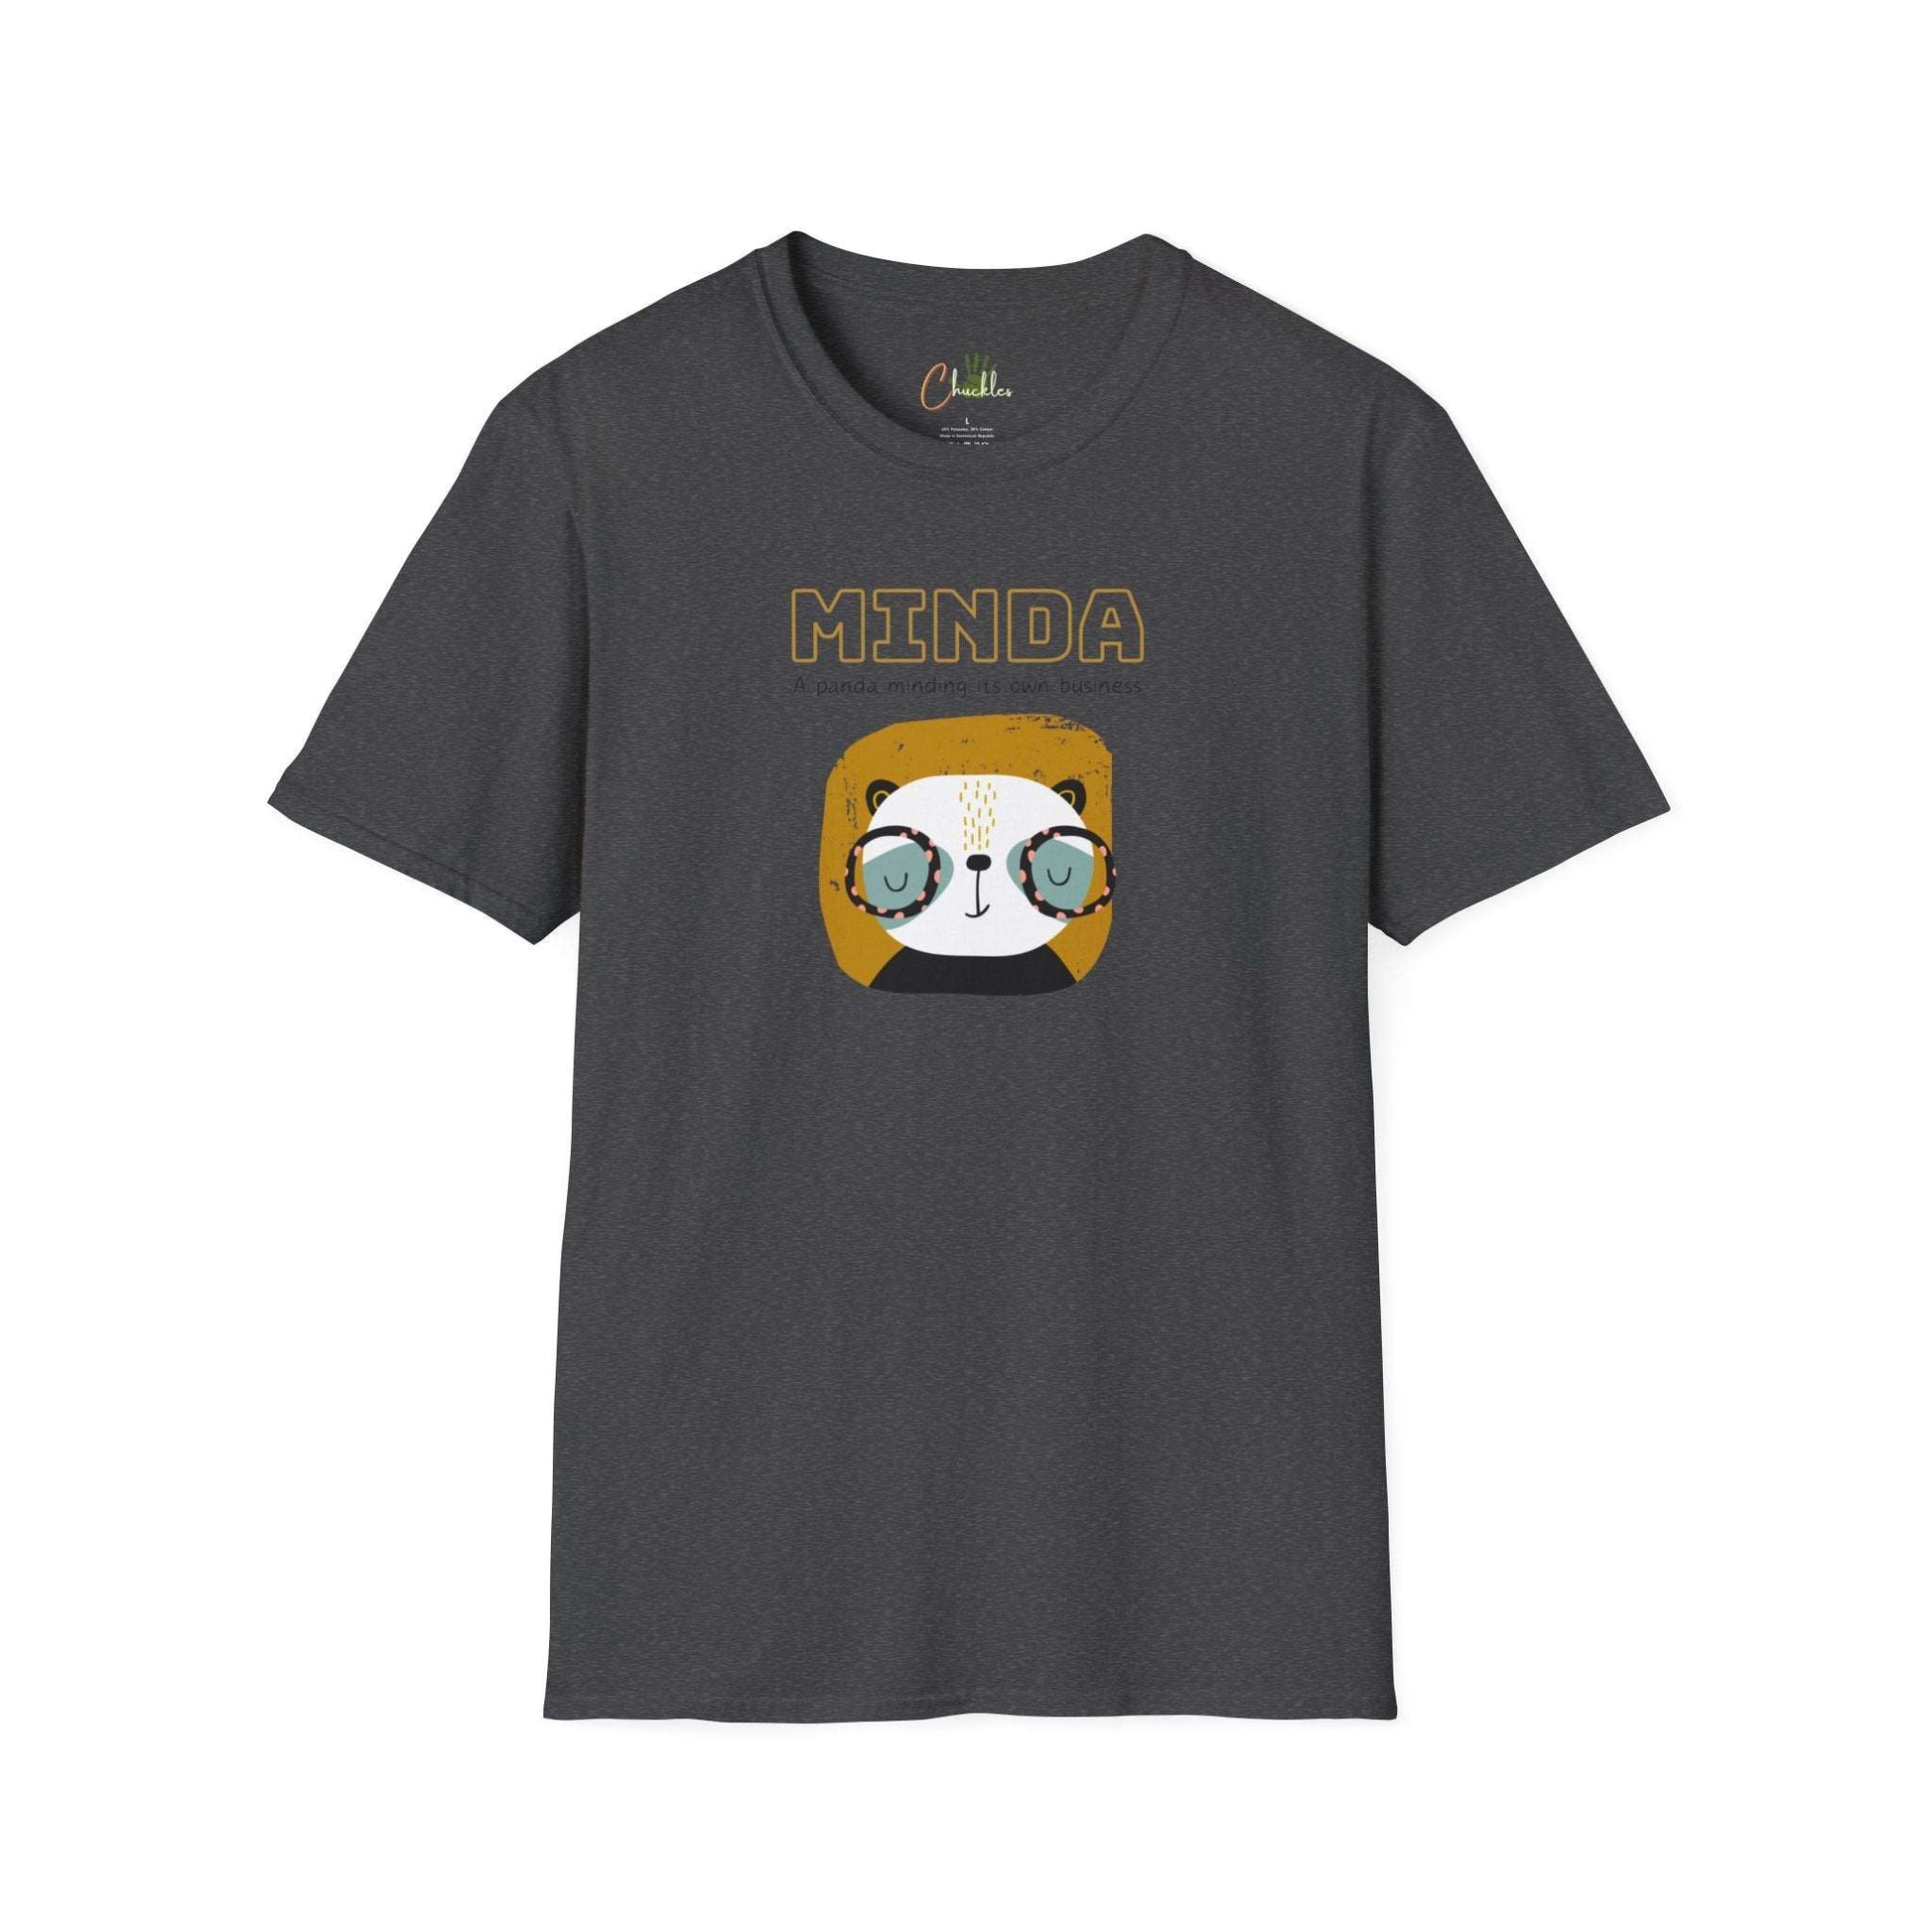 Minda - Panda minding its own business Unisex Softstyle T-Shirt